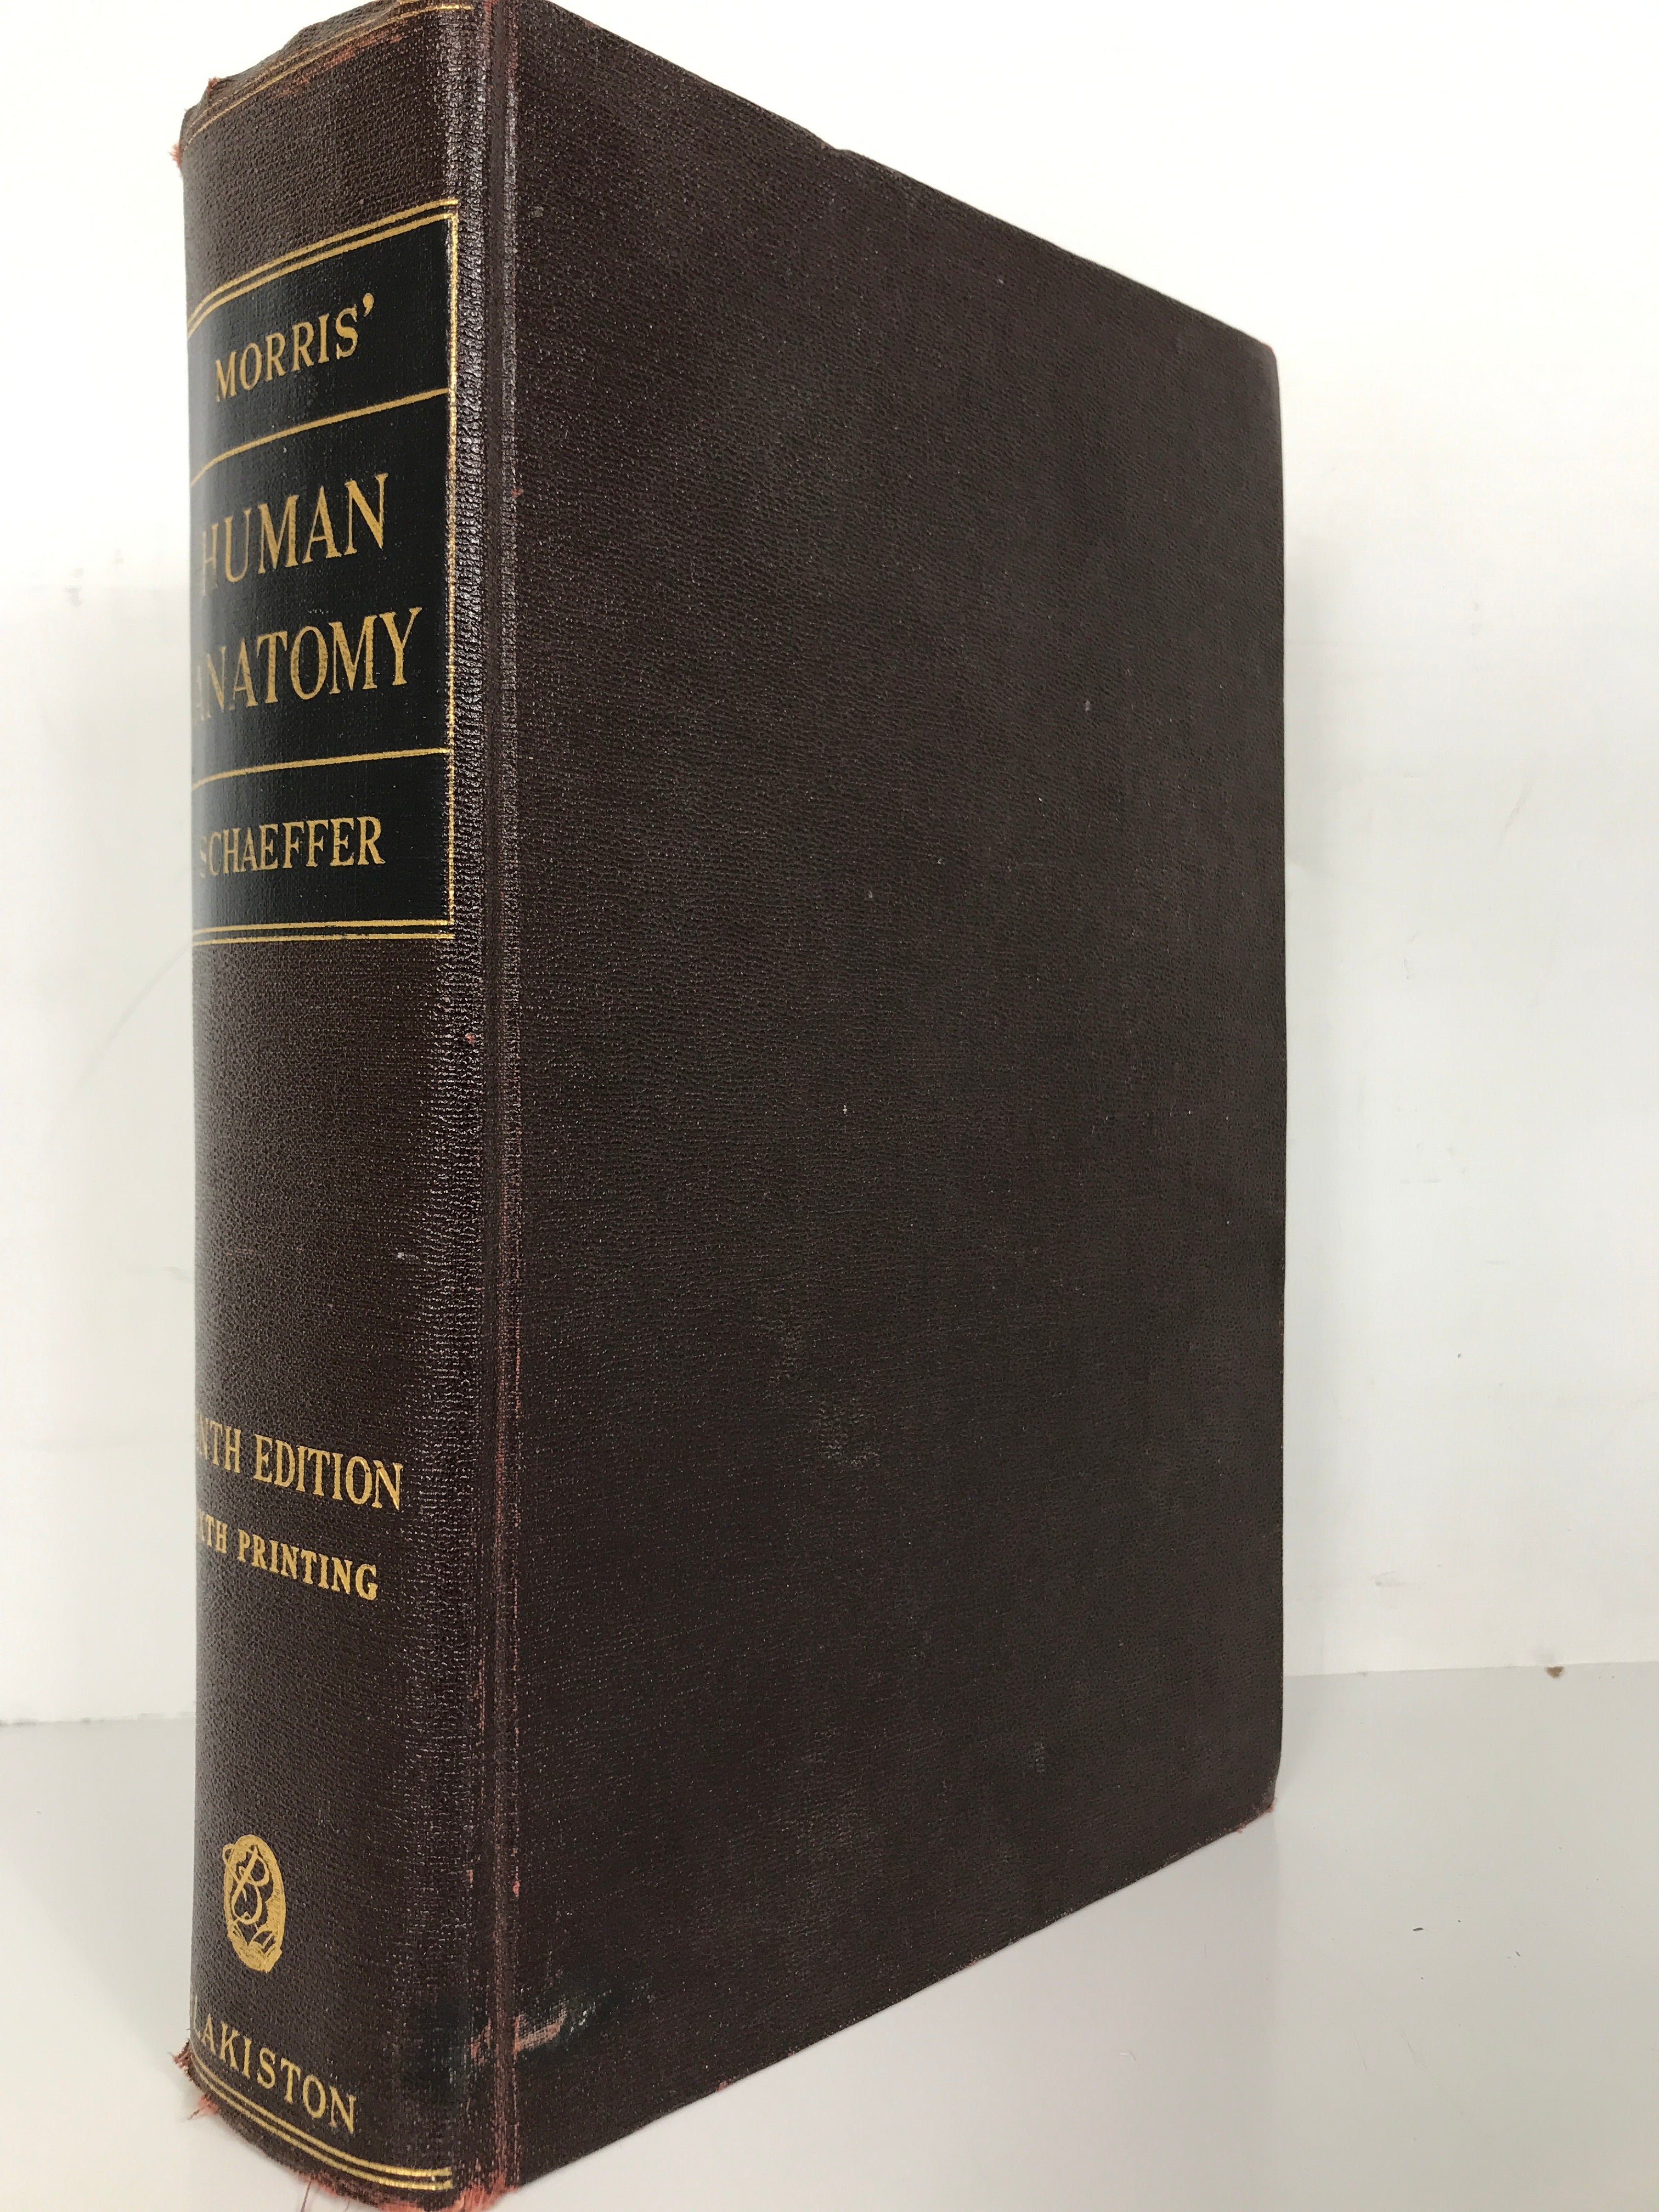 Morris' Human Anatomy by Schaeffer 10th Edition 1947 HC